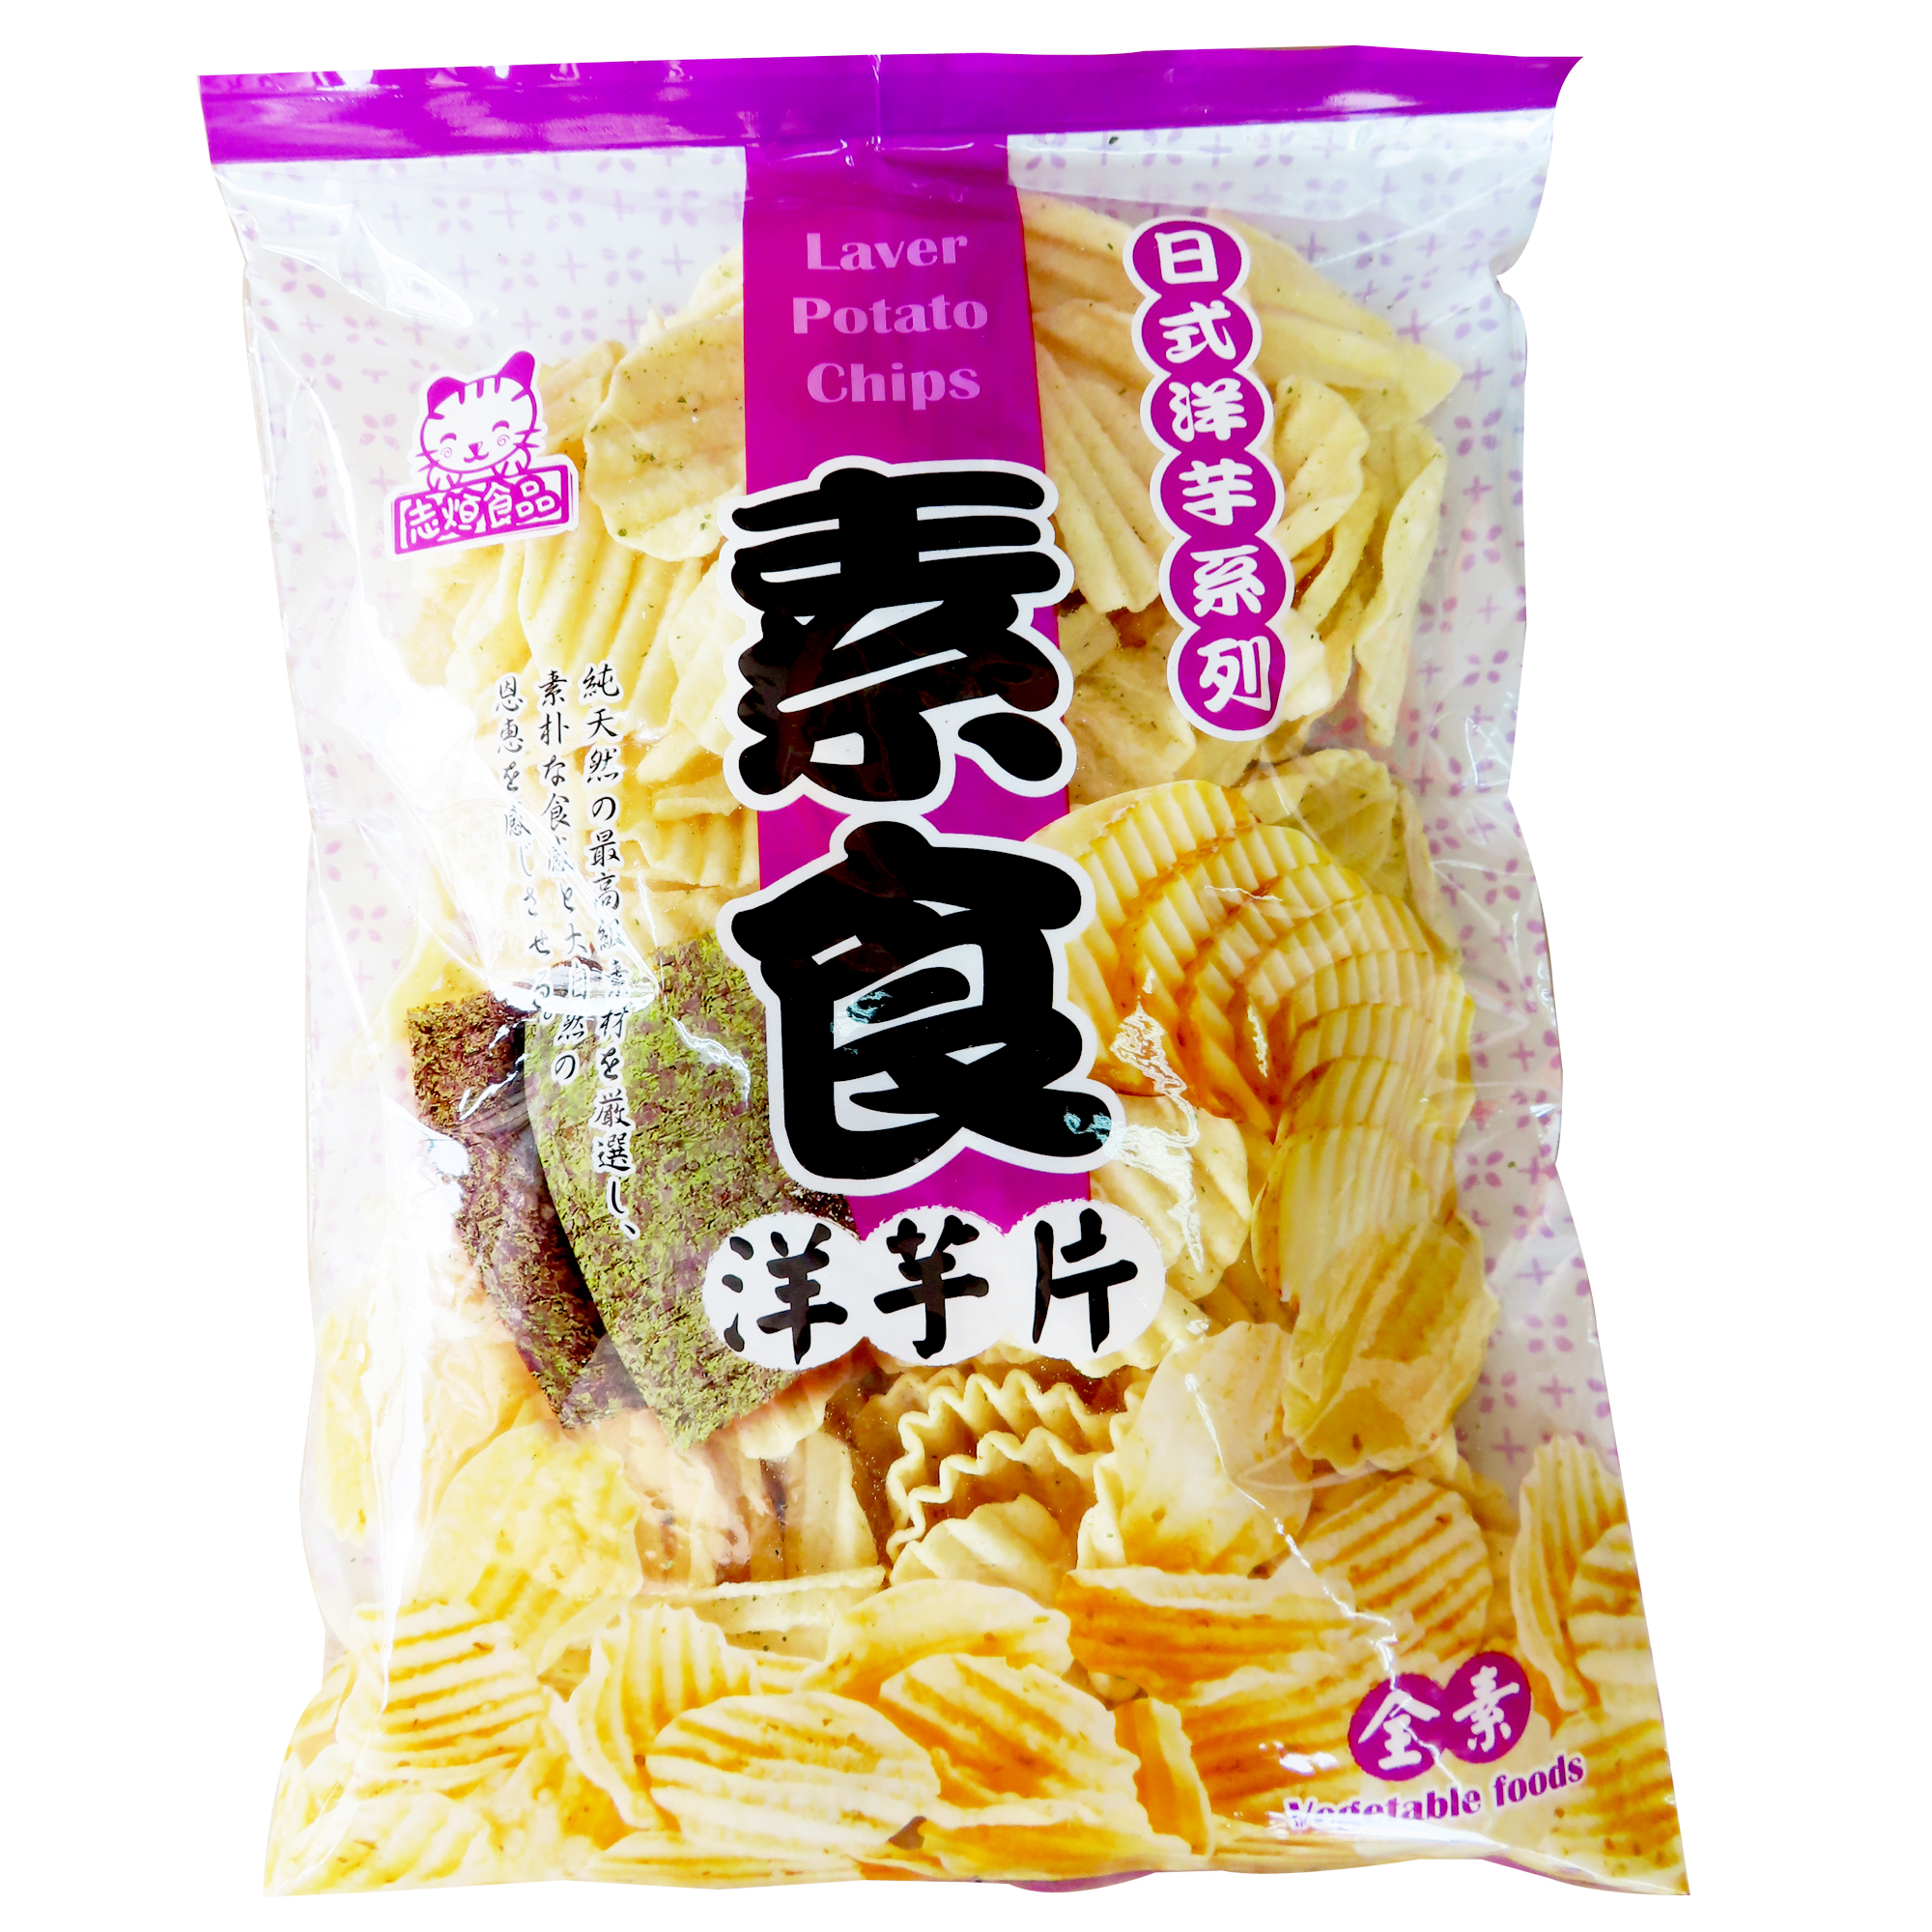 Image Laver Potato Chips 志恒 - 曰式洋芋片150grams